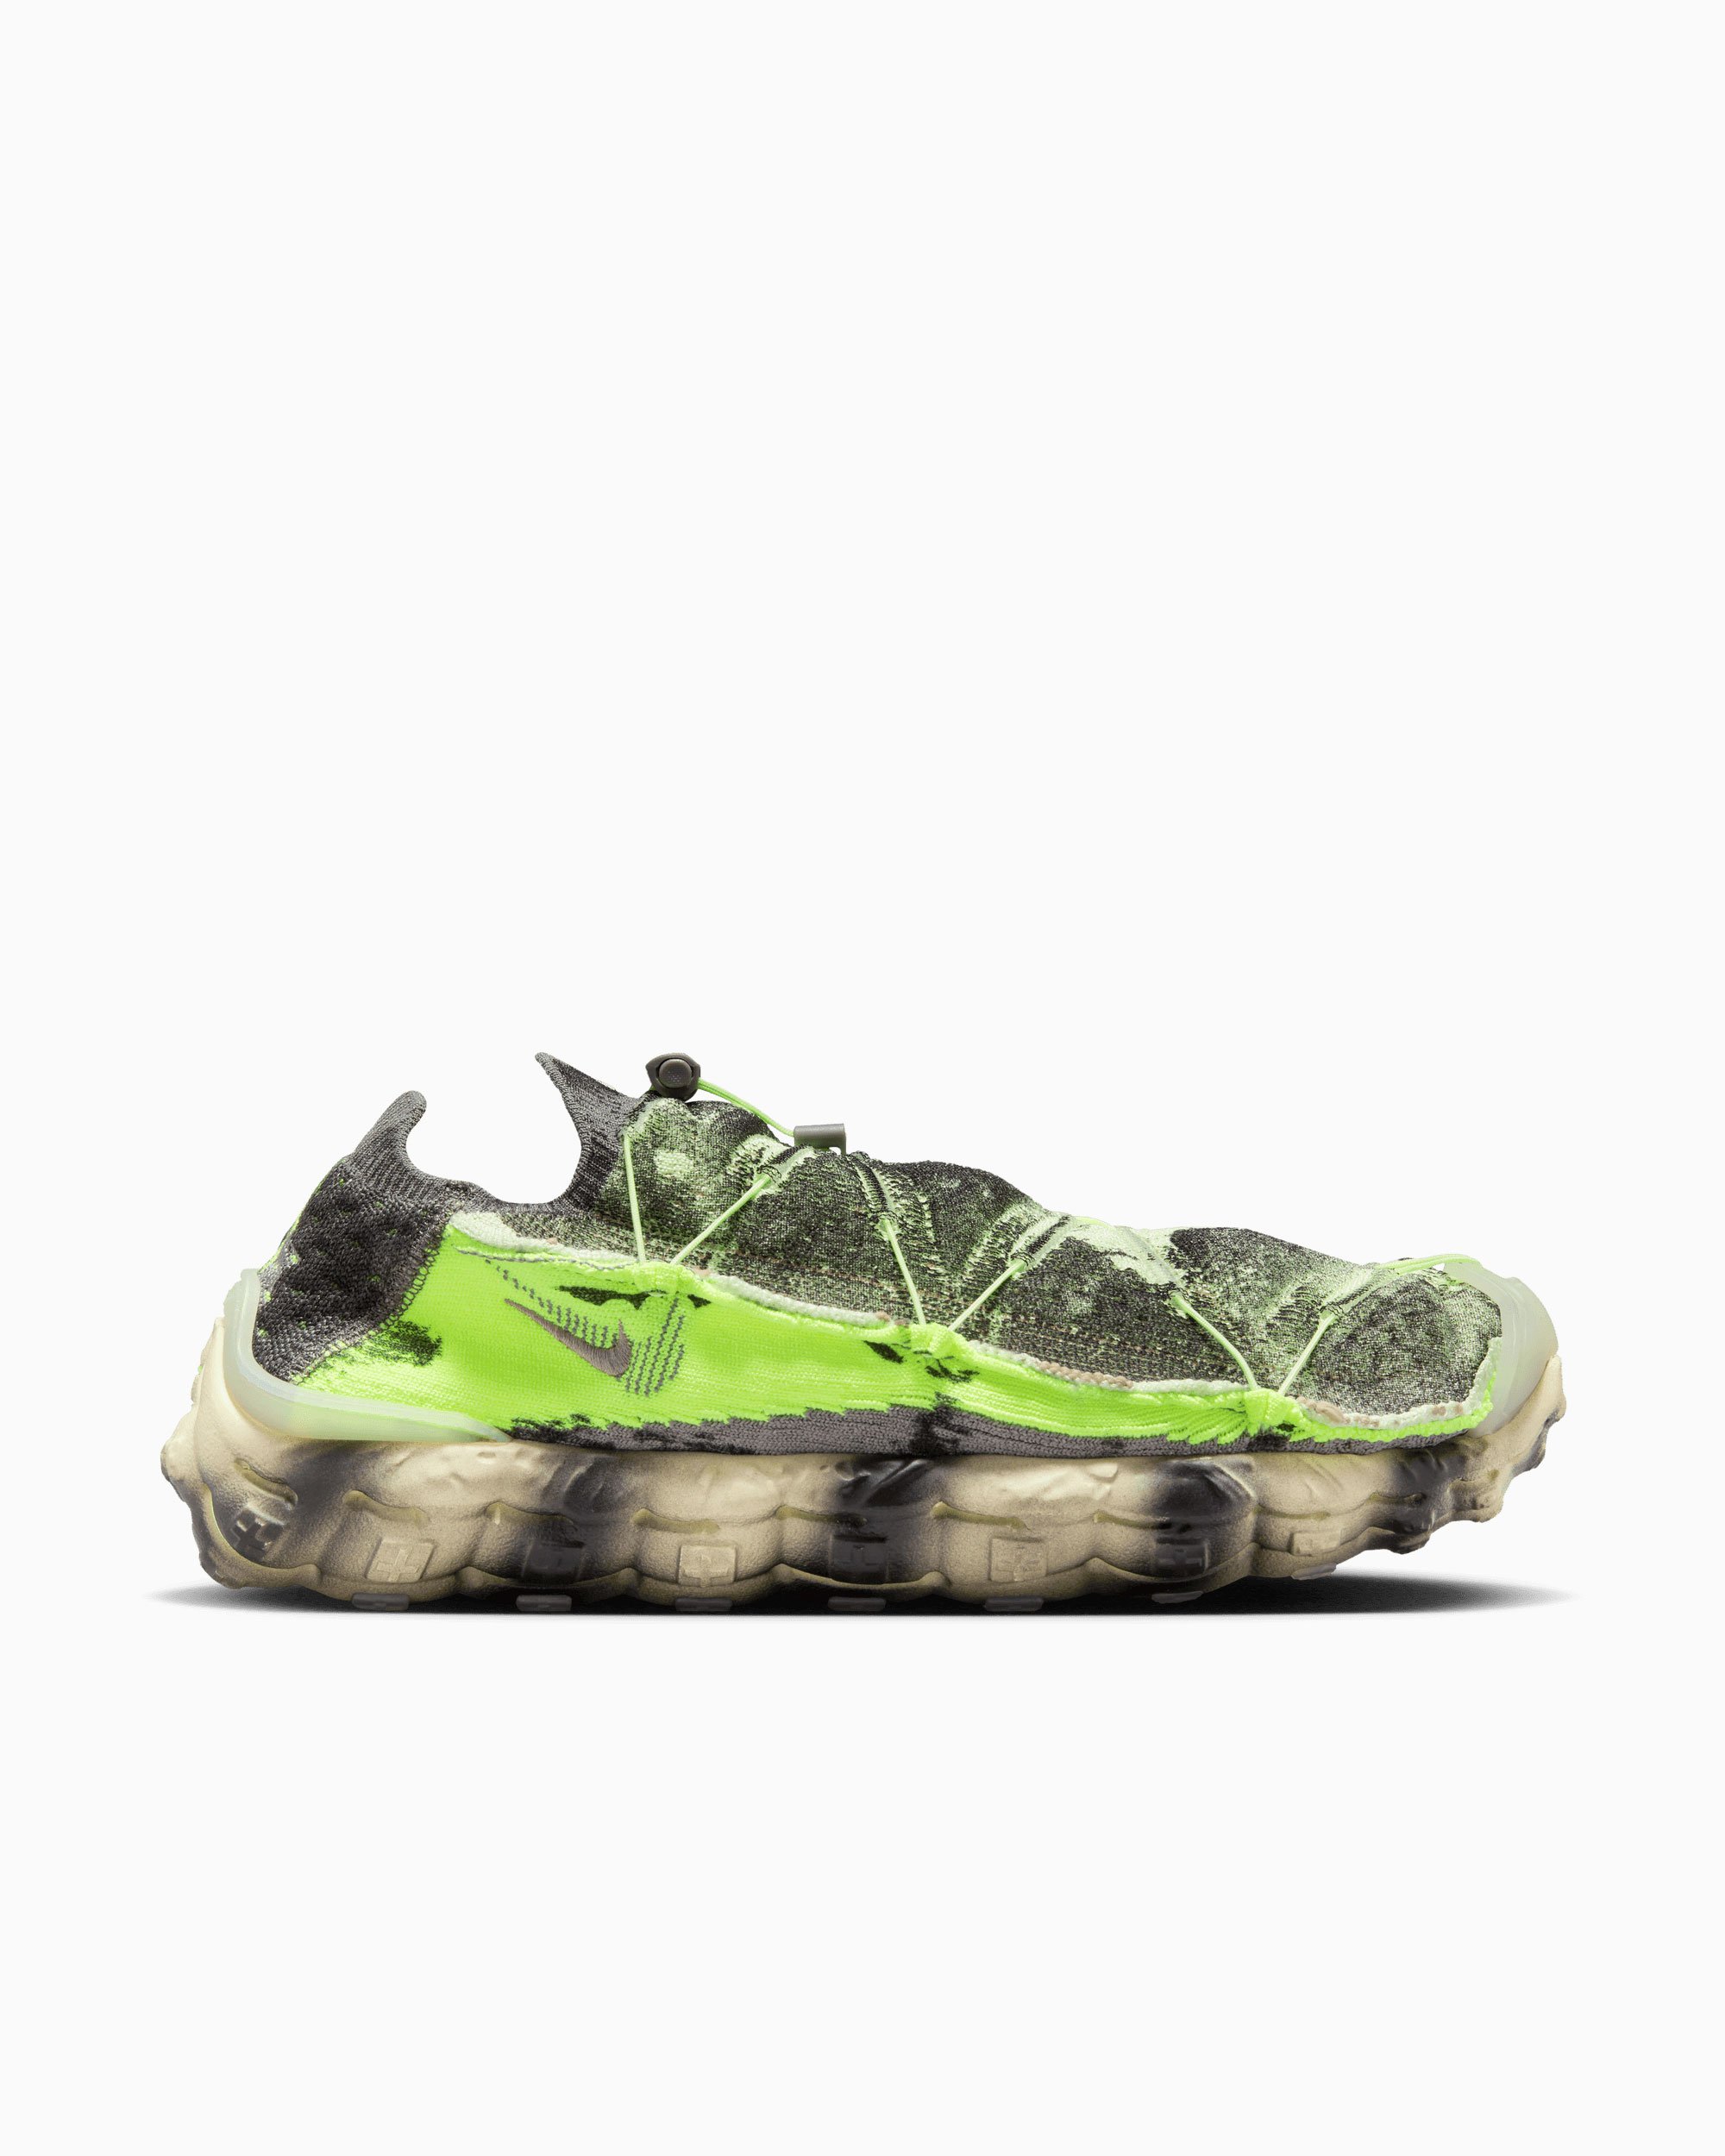 Comienzo Sala Respetuoso del medio ambiente Nike ISPA Mindbody Green DH7546-700| Buy Online at FOOTDISTRICT